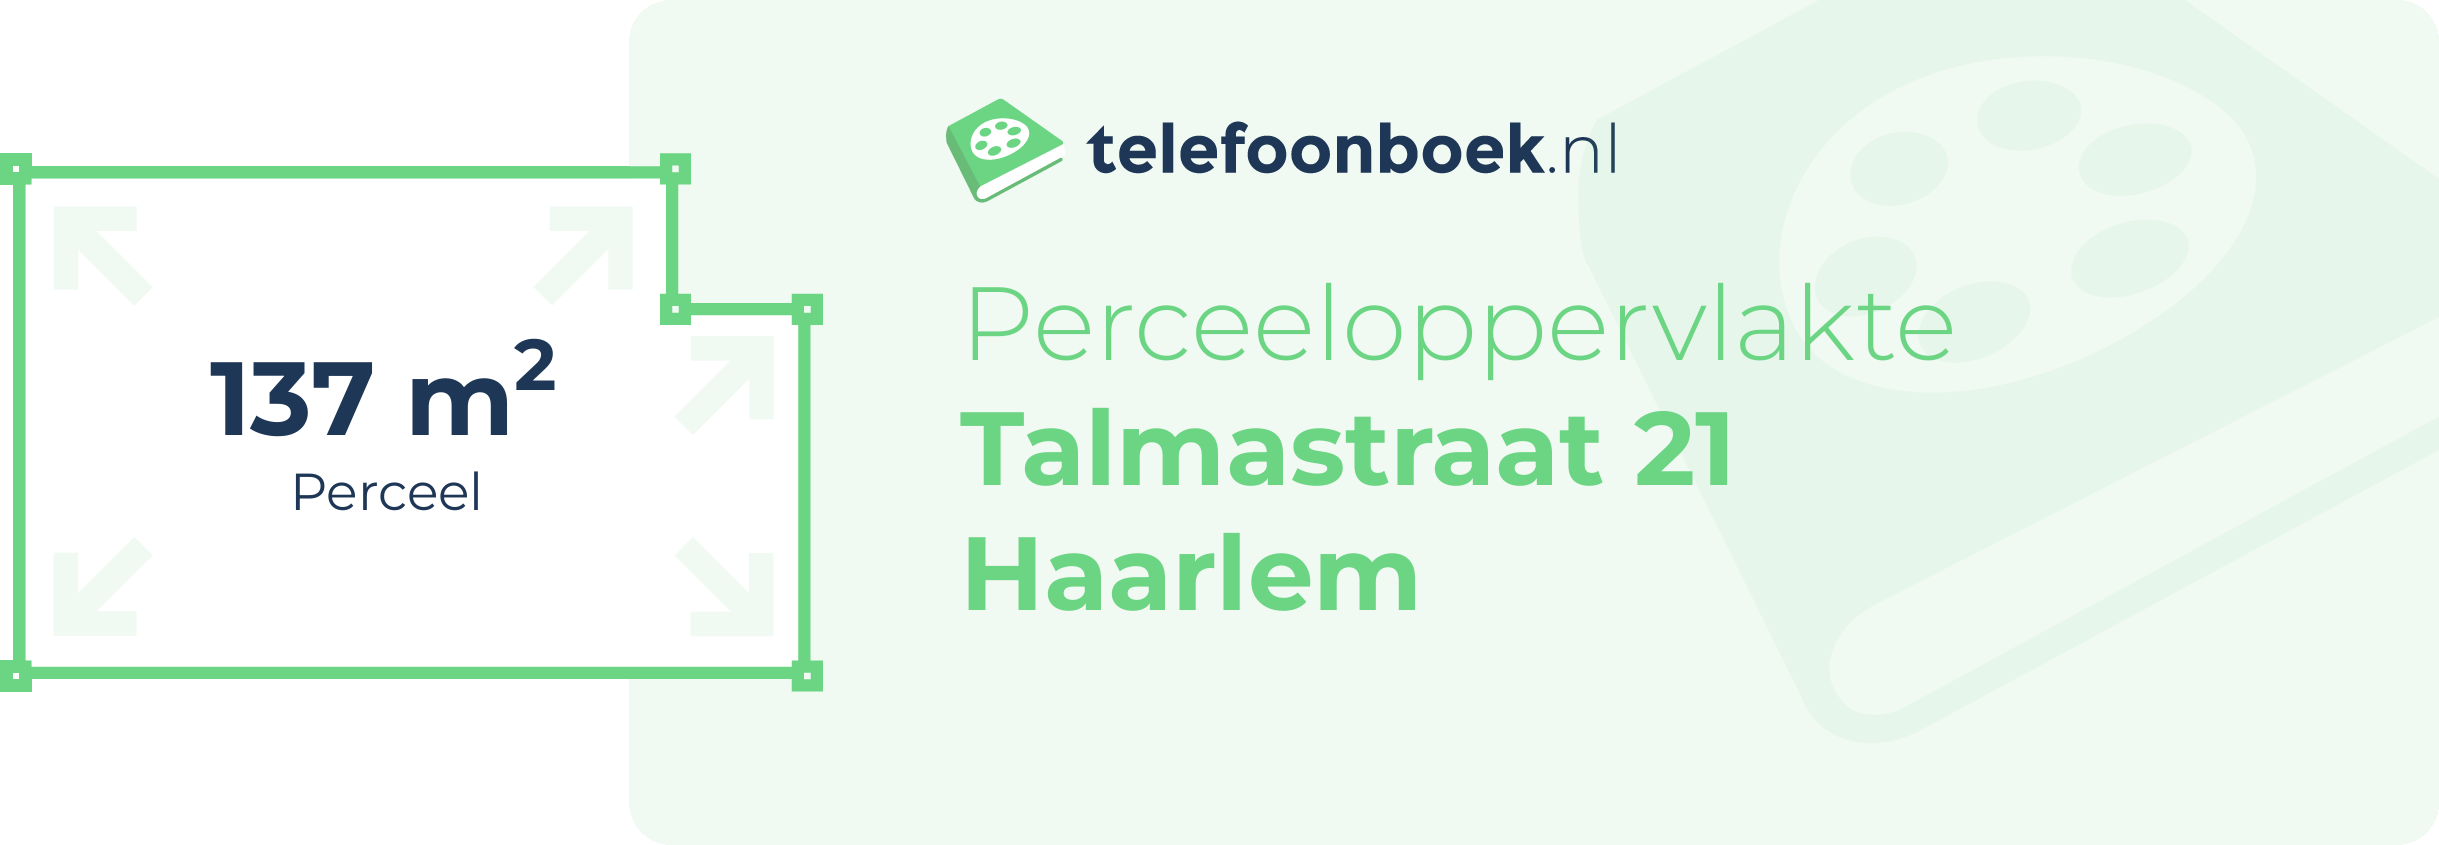 Perceeloppervlakte Talmastraat 21 Haarlem